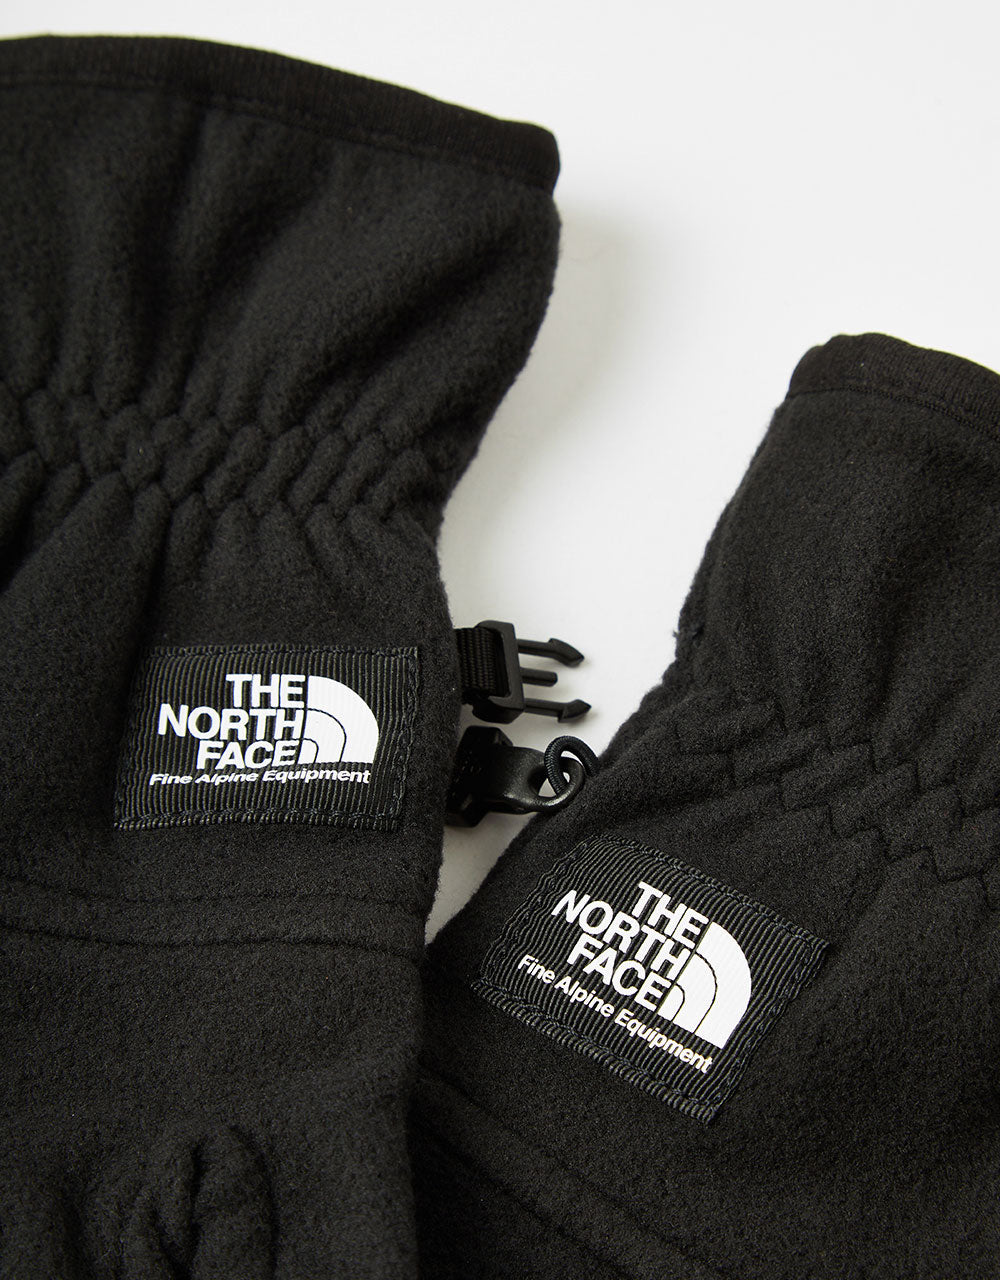 The North Face Etip Hw Fleece Glove - TNF Black